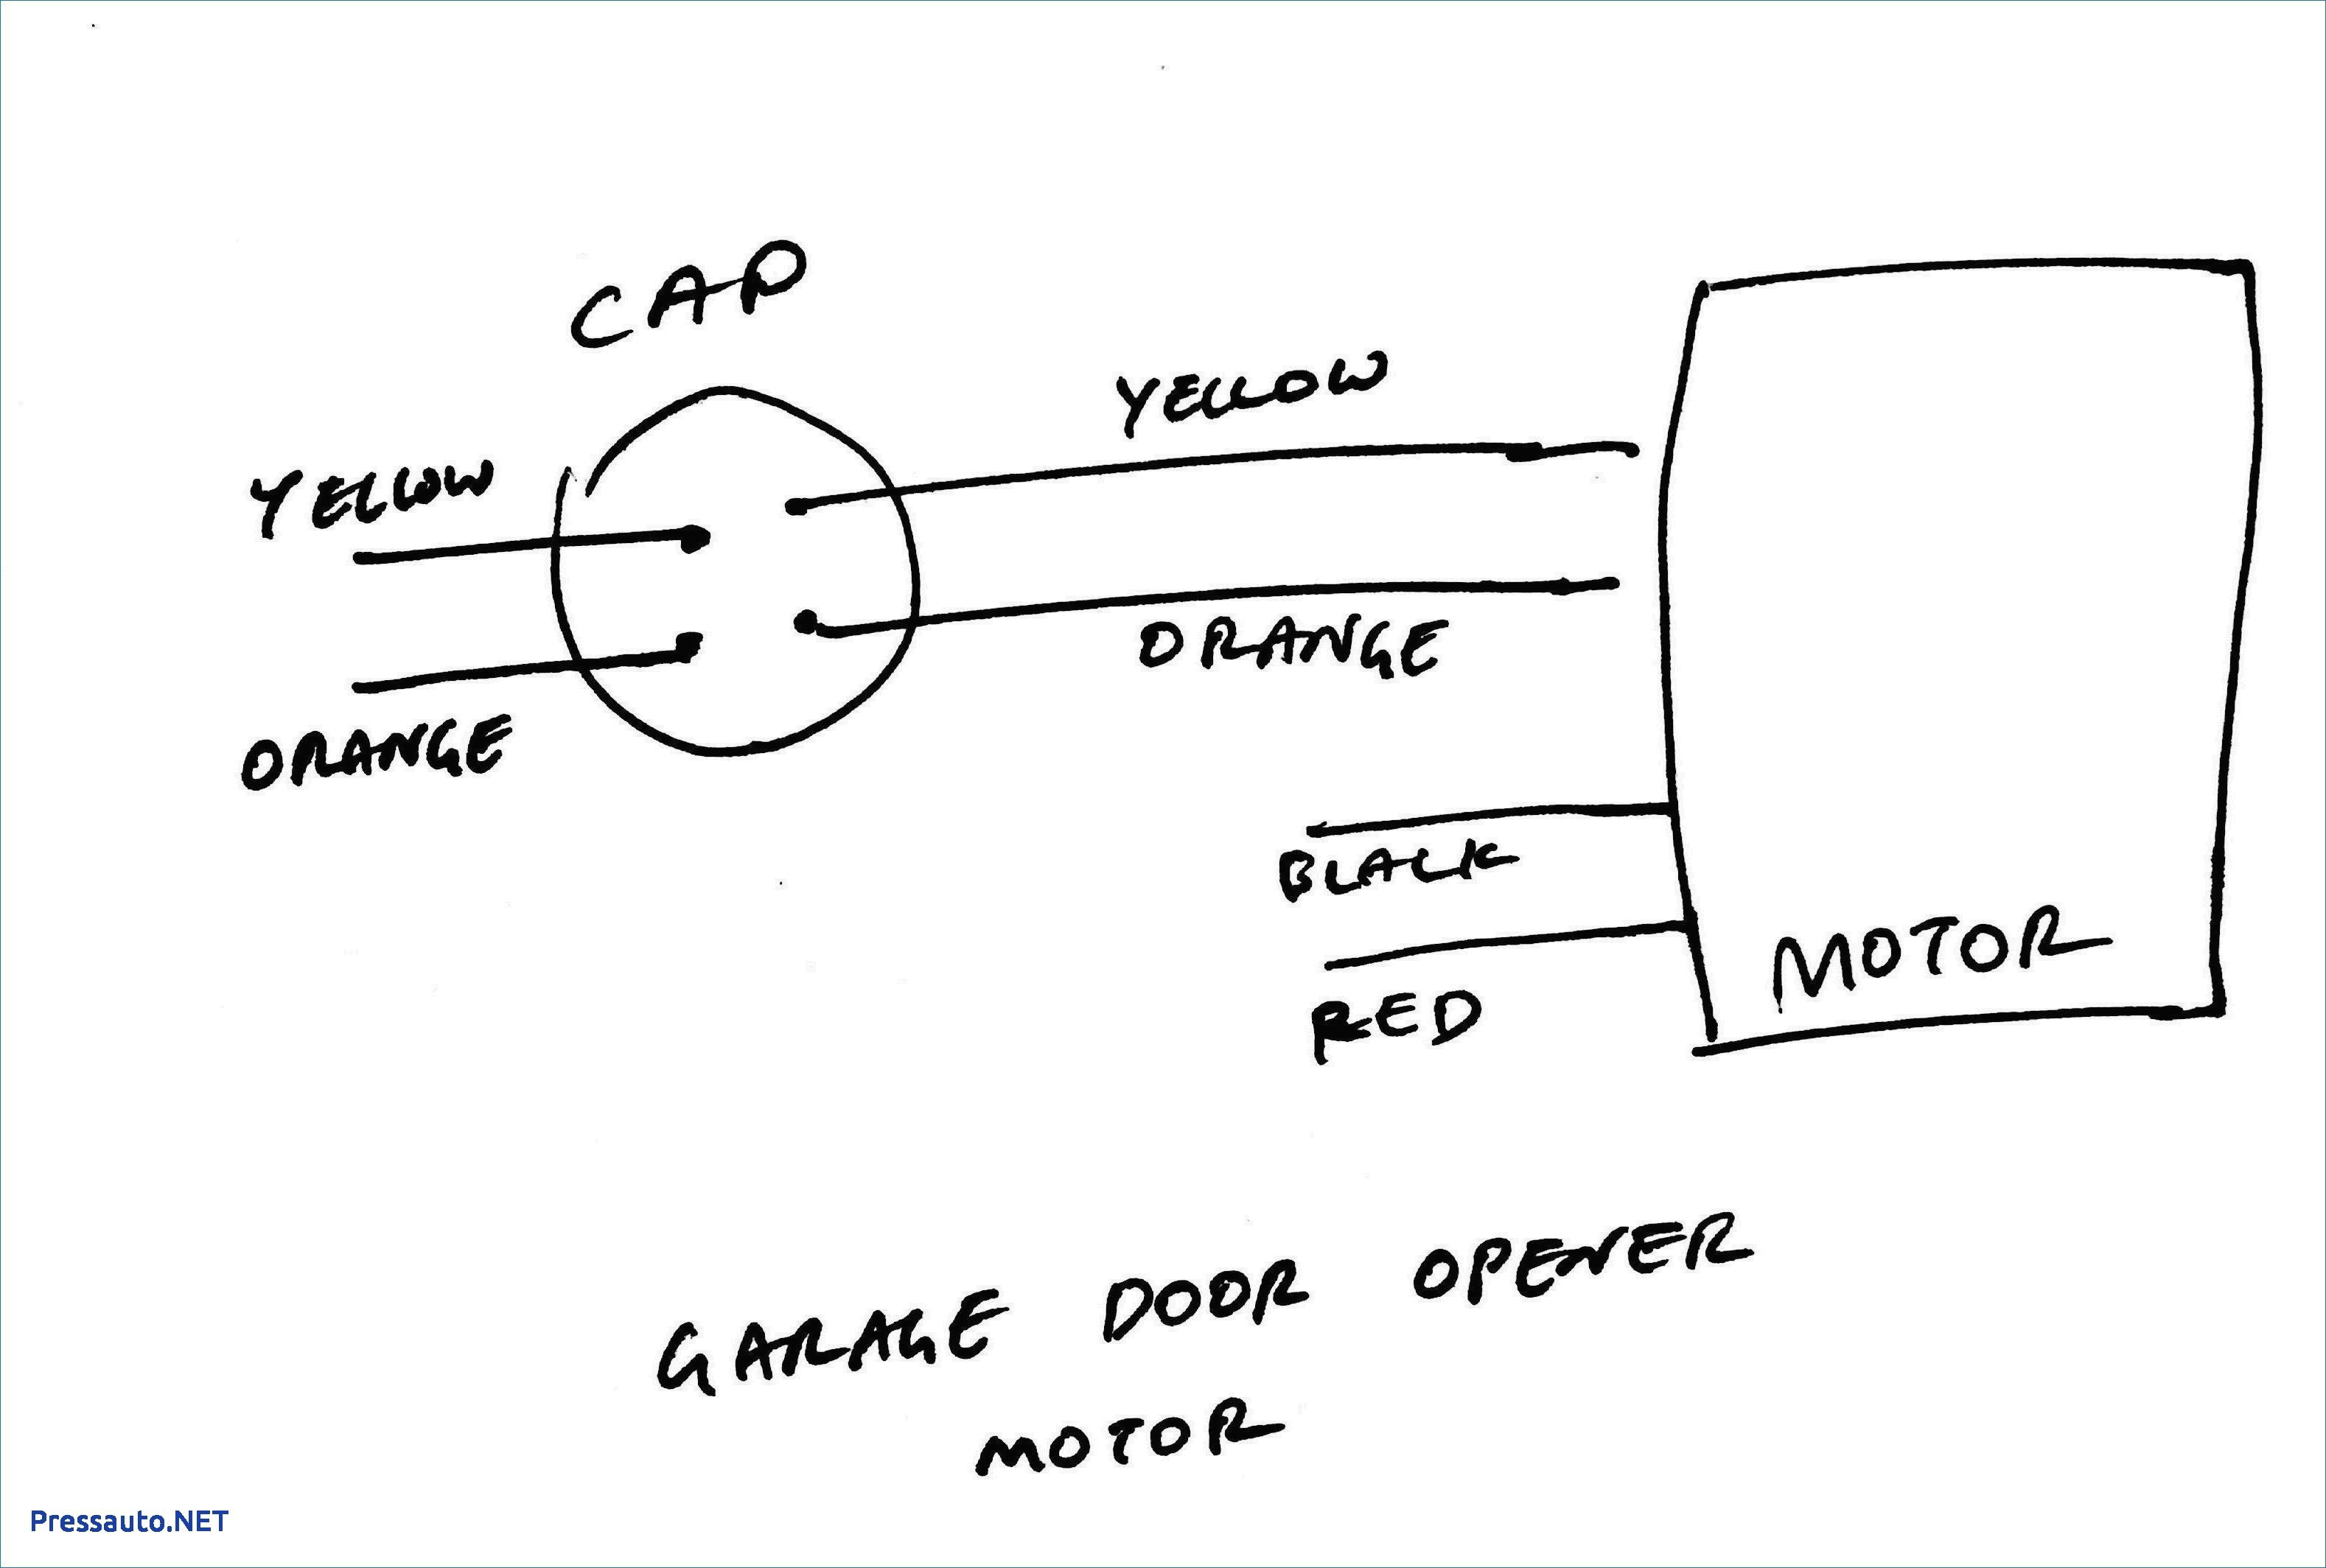 Fantastic Fan Wiring Diagram | Wiring Diagram - Fantastic Fan Wiring Diagram